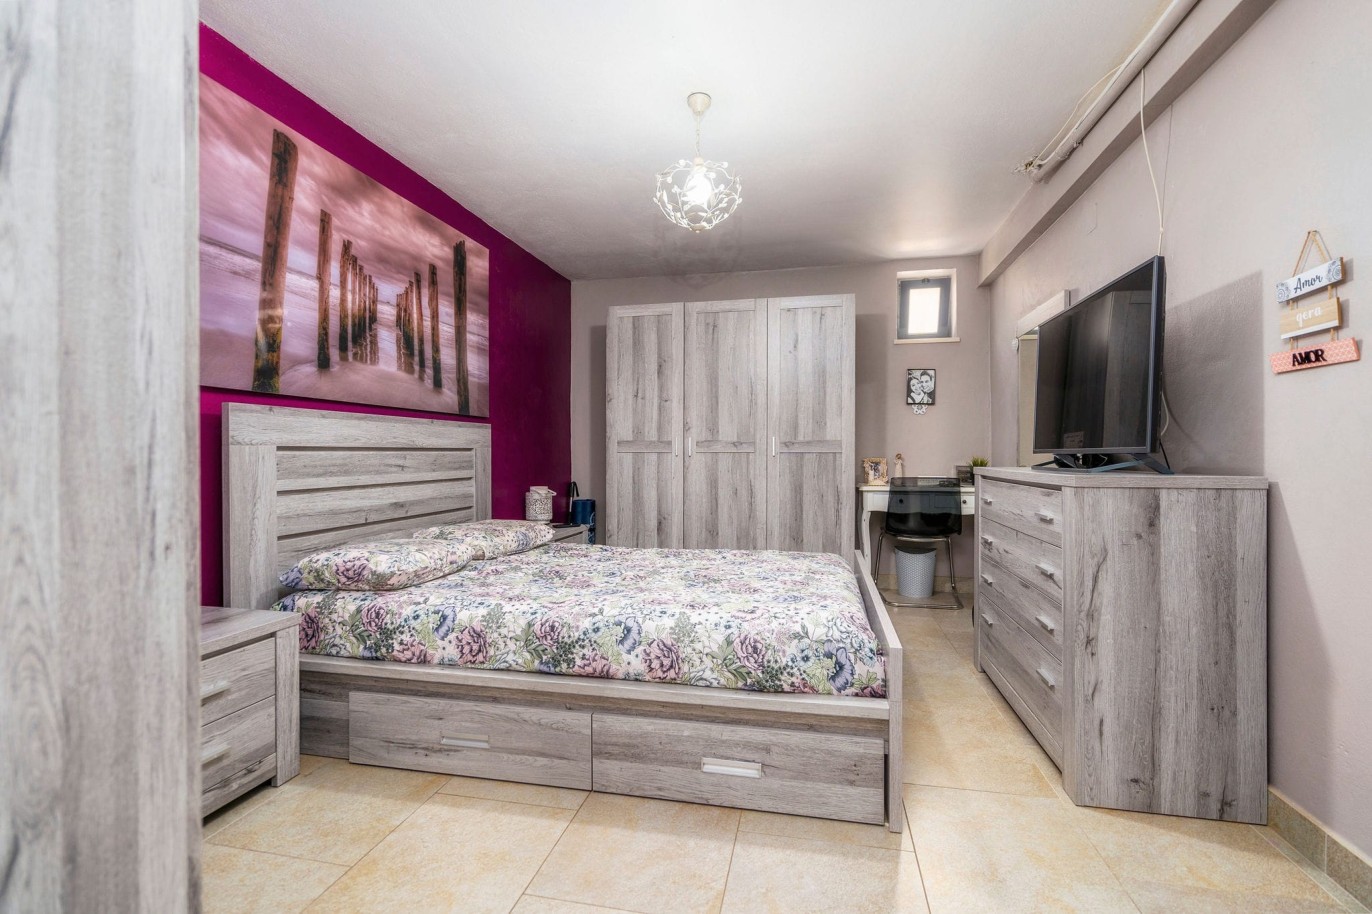 3+1 bedroom villa & 2 bedroom apartment for sale in Quarteira, Algarve_240774